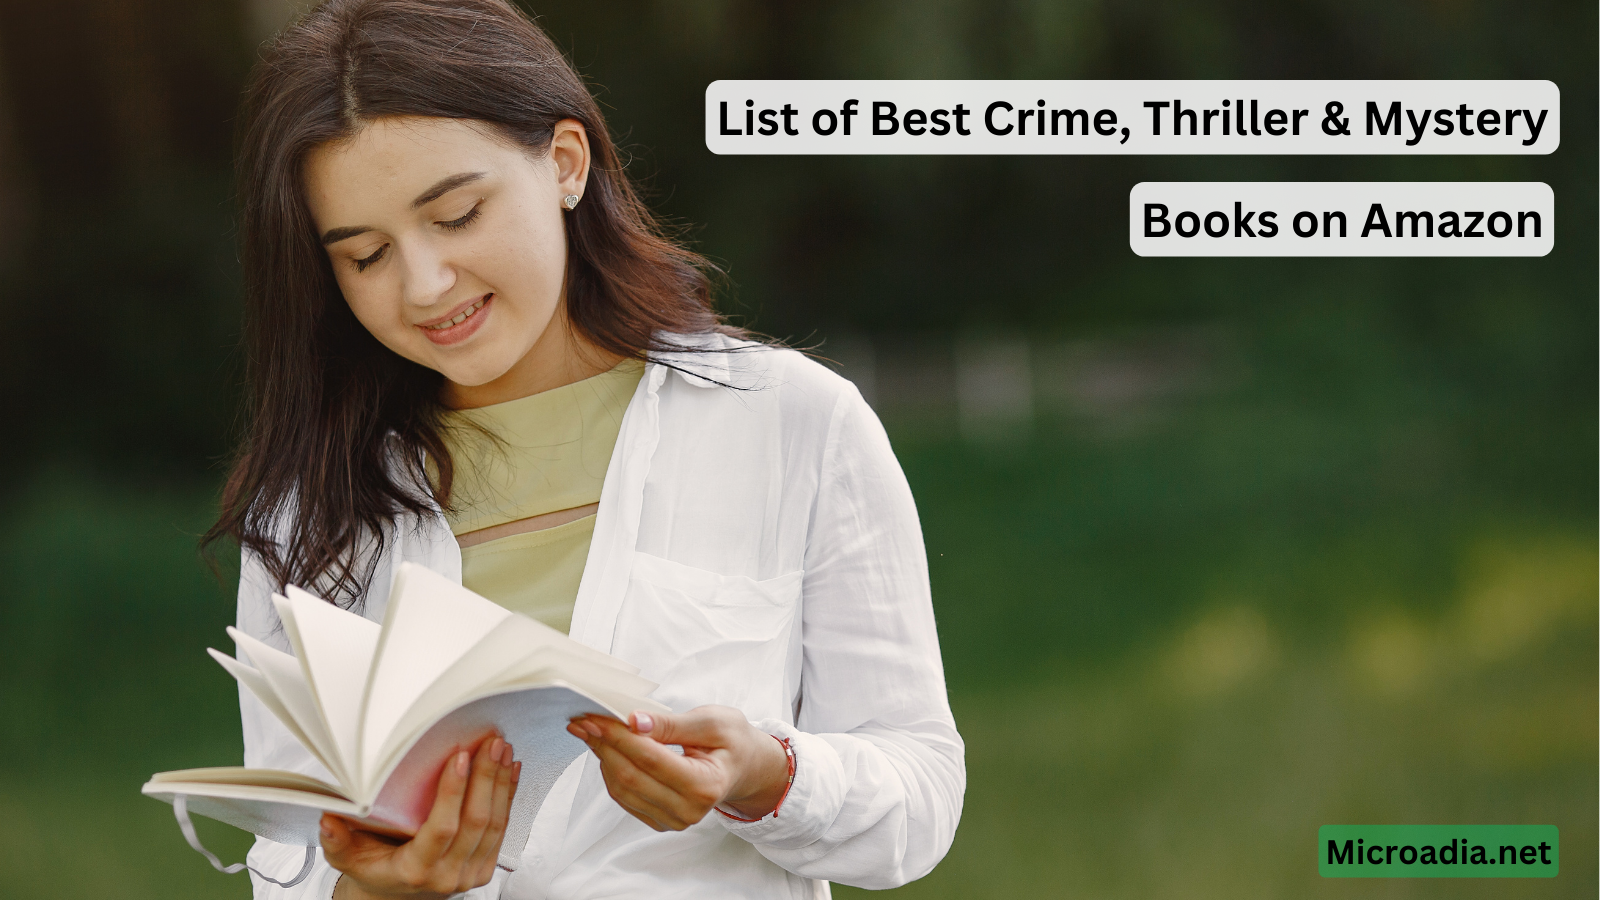 List of Best Crime, Thriller & Mystery Books on Amazon